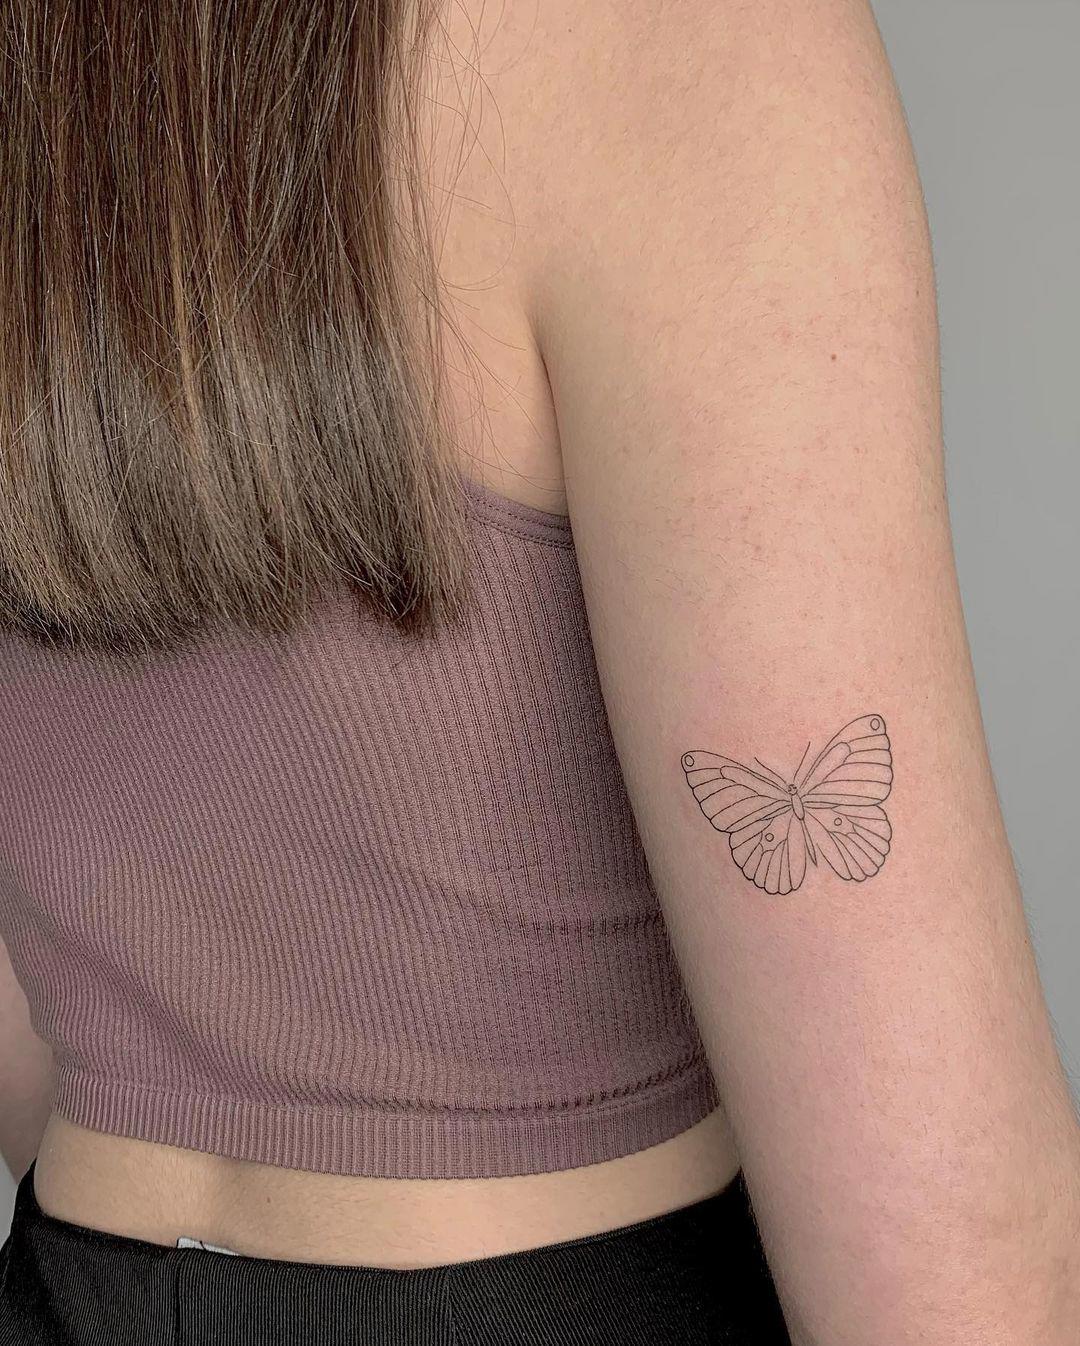 Tattoo de mariposa con diseño lineal